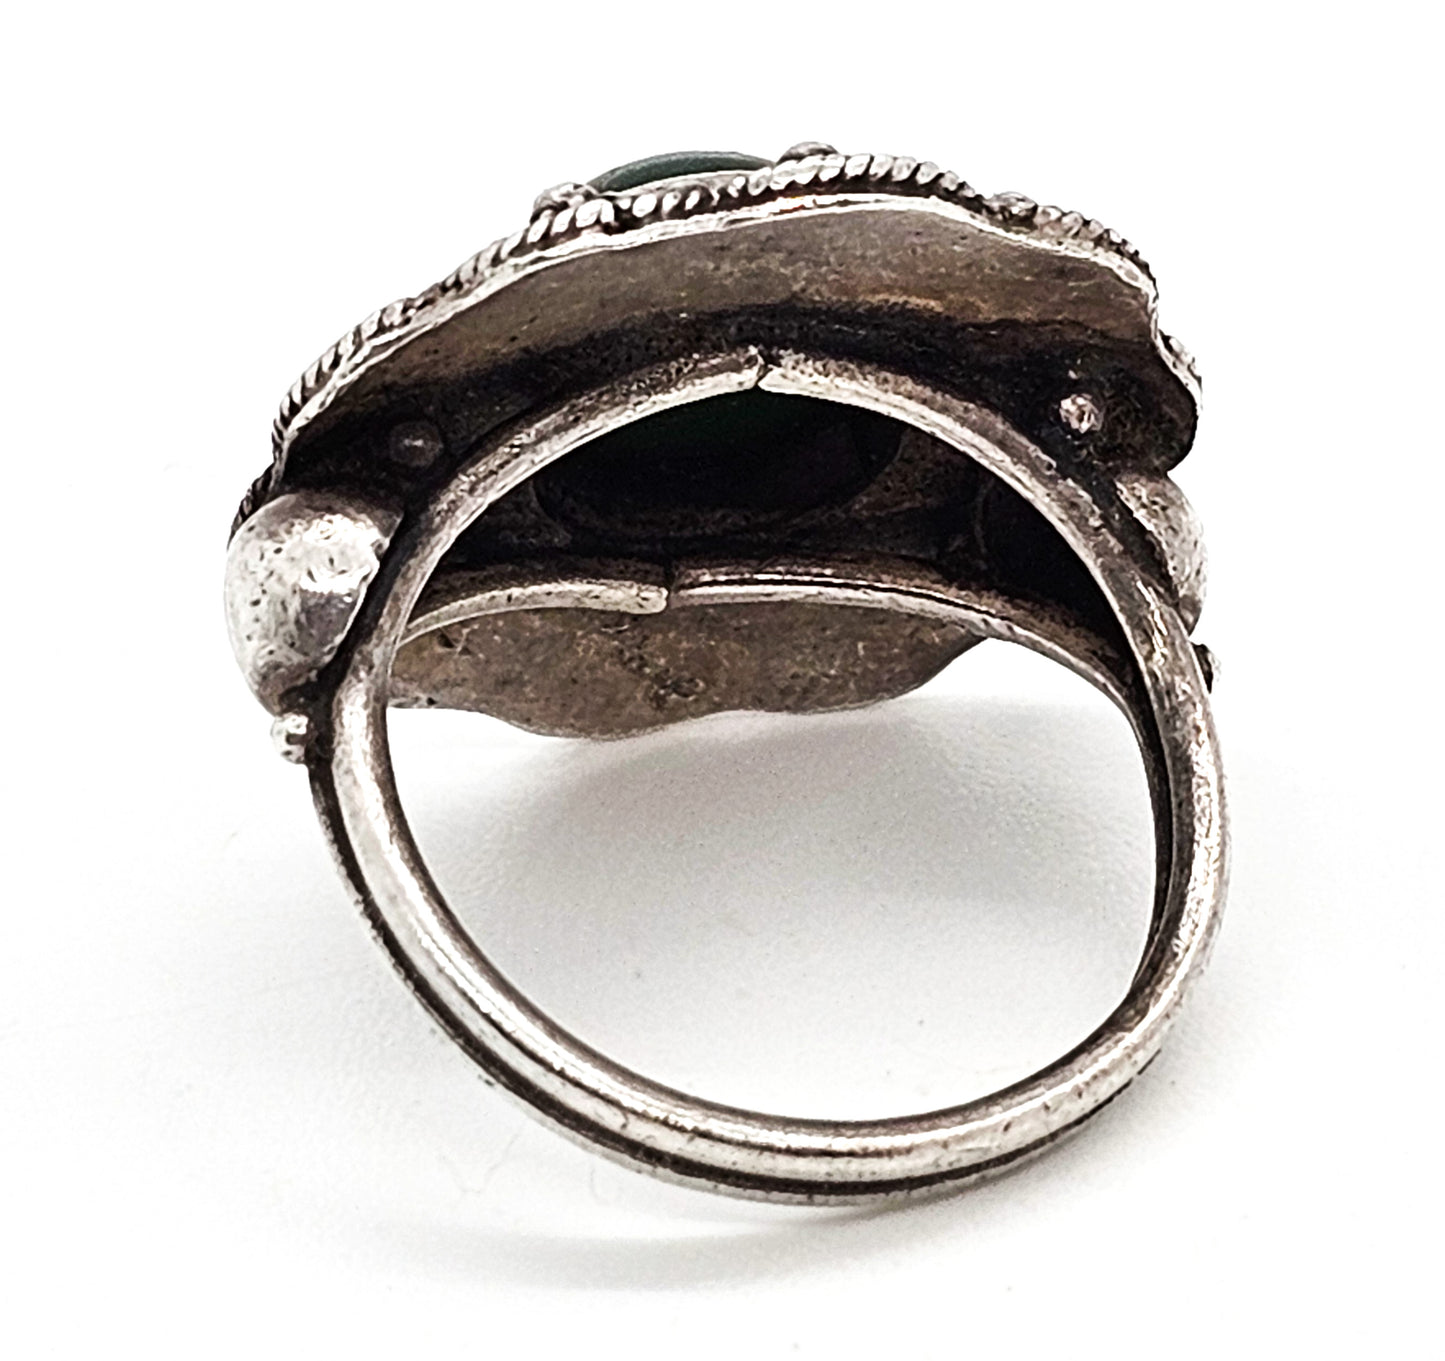 Zeeuwse knoop bloodstone large vintage sterling silver statement ring size 5.5